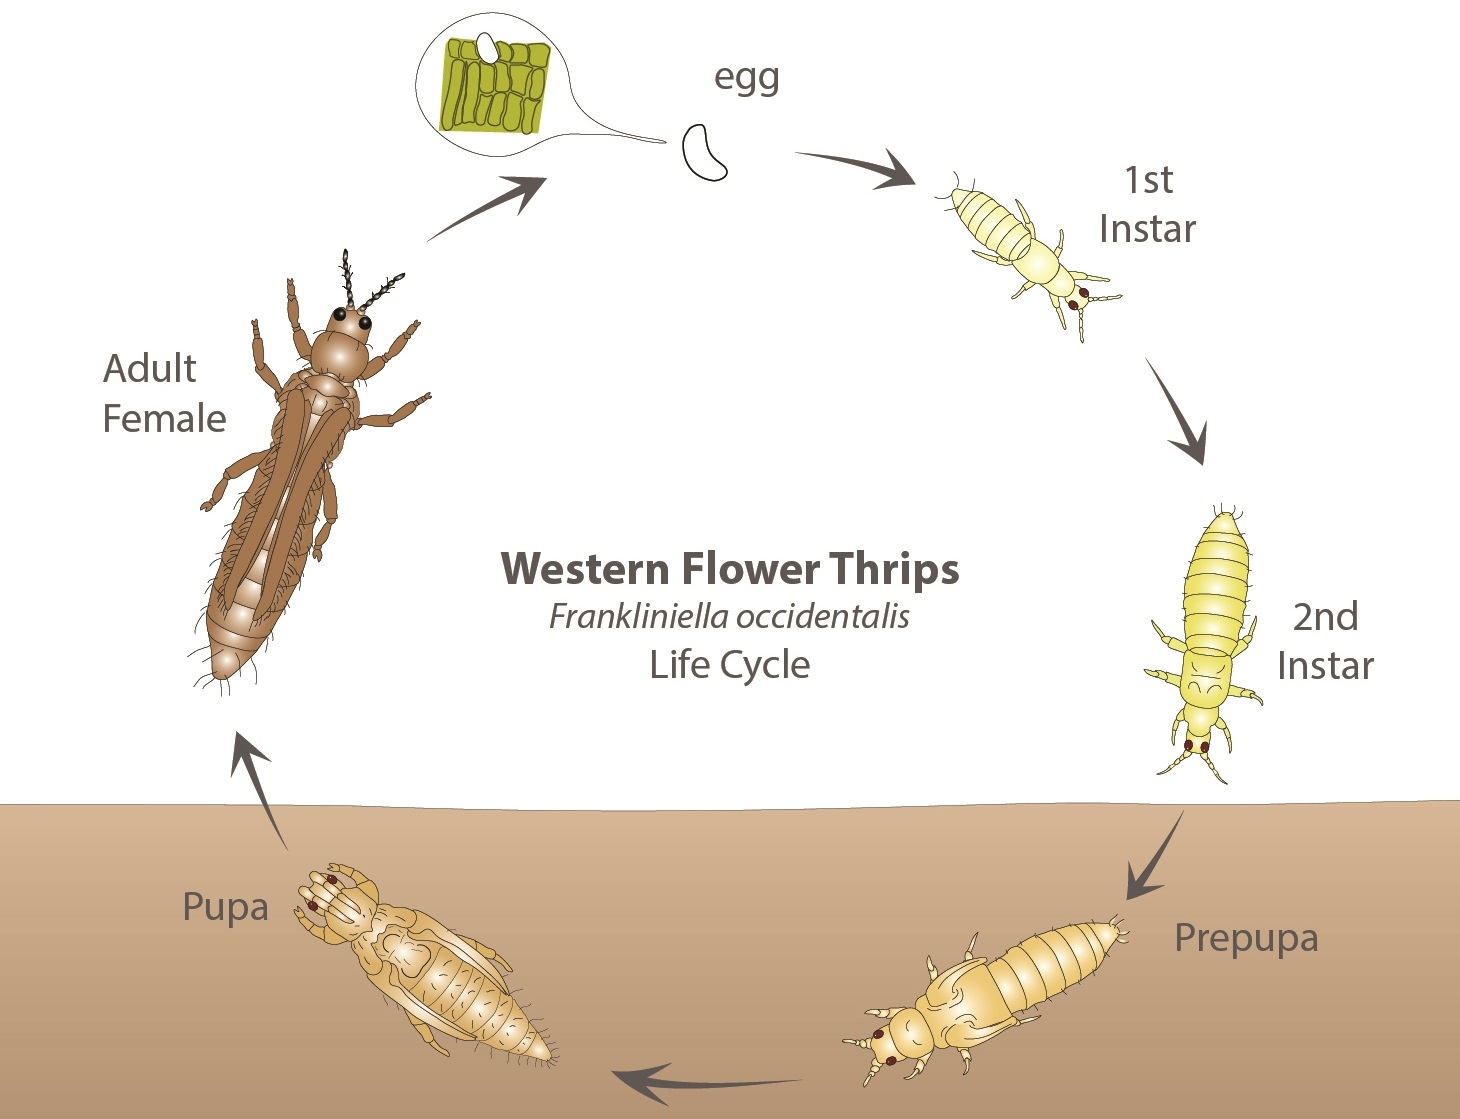 White Cedar Moth - Animal Poisons Helpline